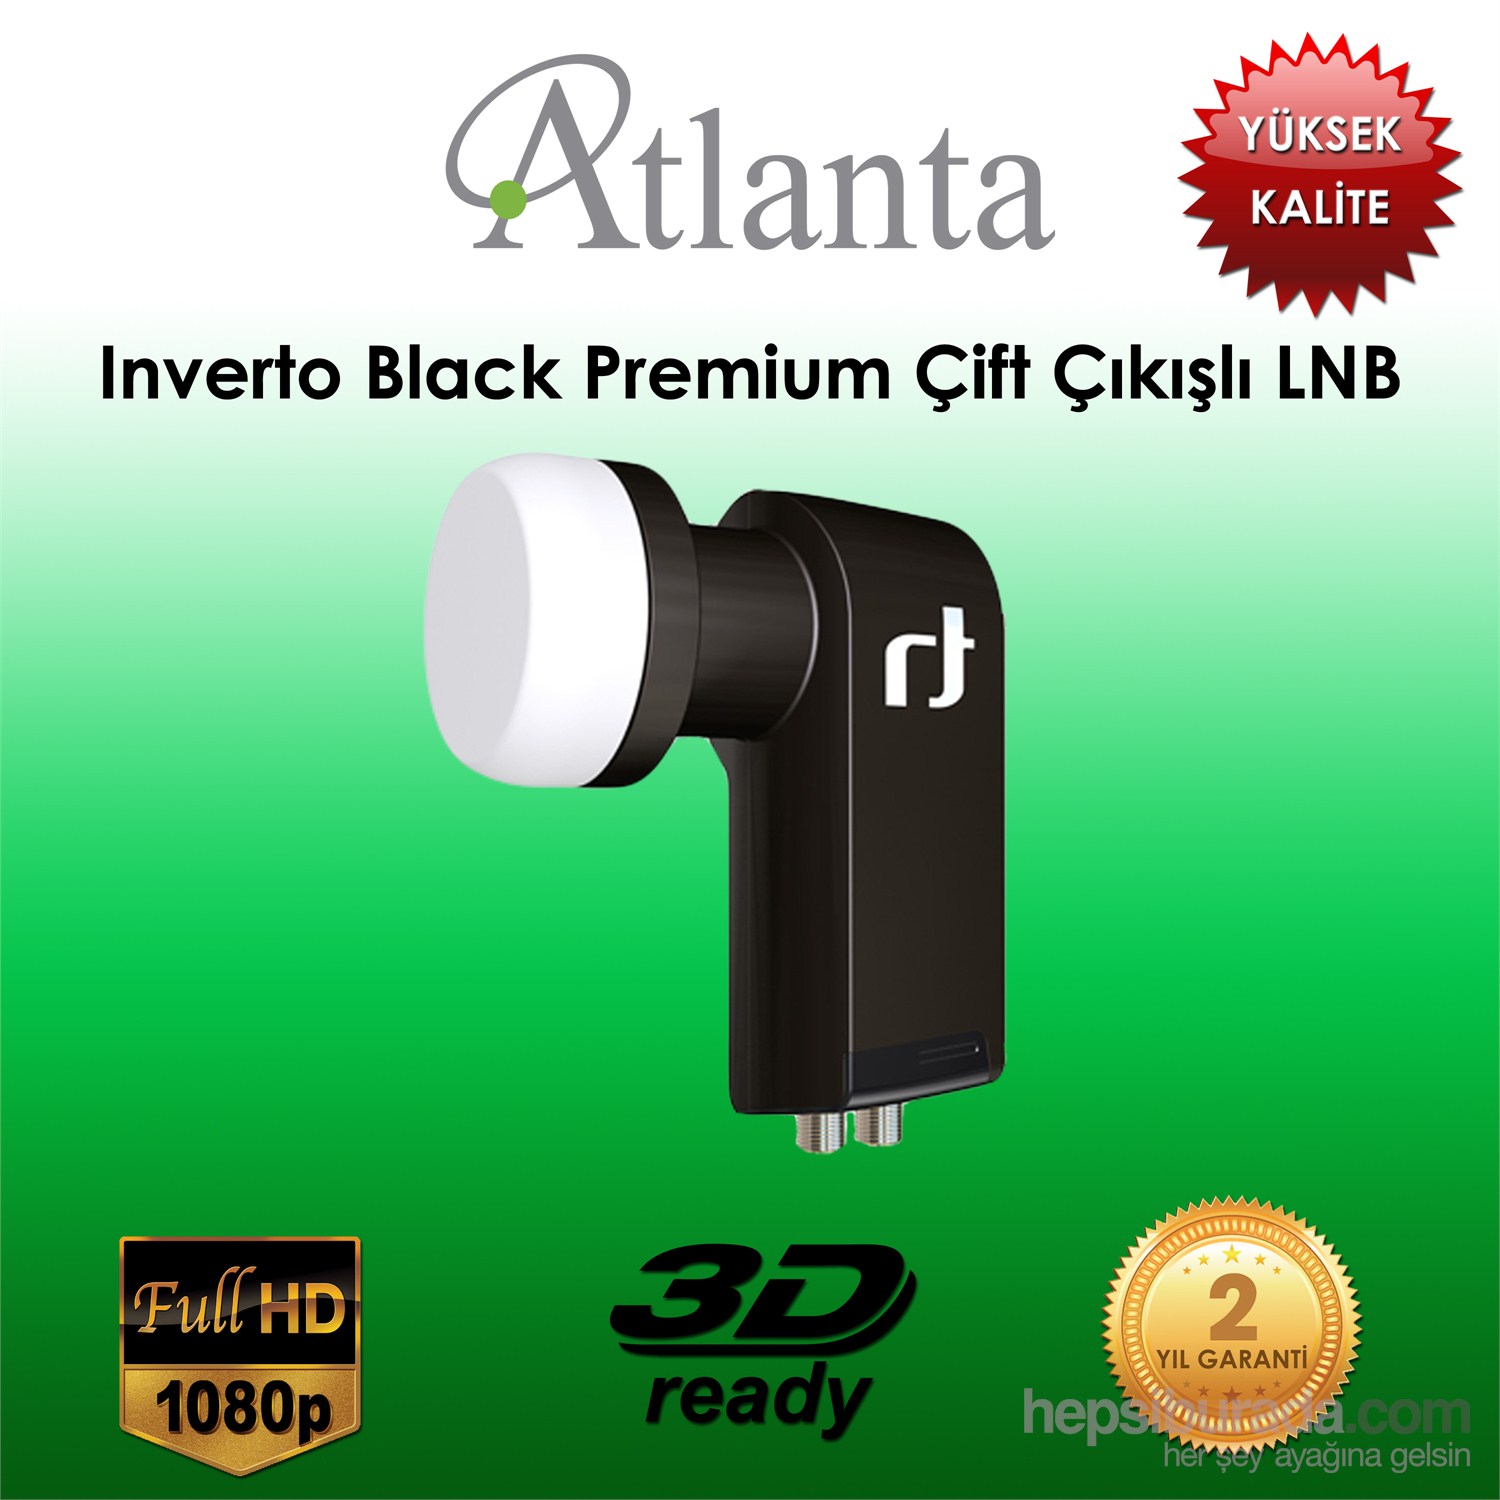 Atlanta Inverto Black Premium Twin LNB (Çift Çıkışlı)